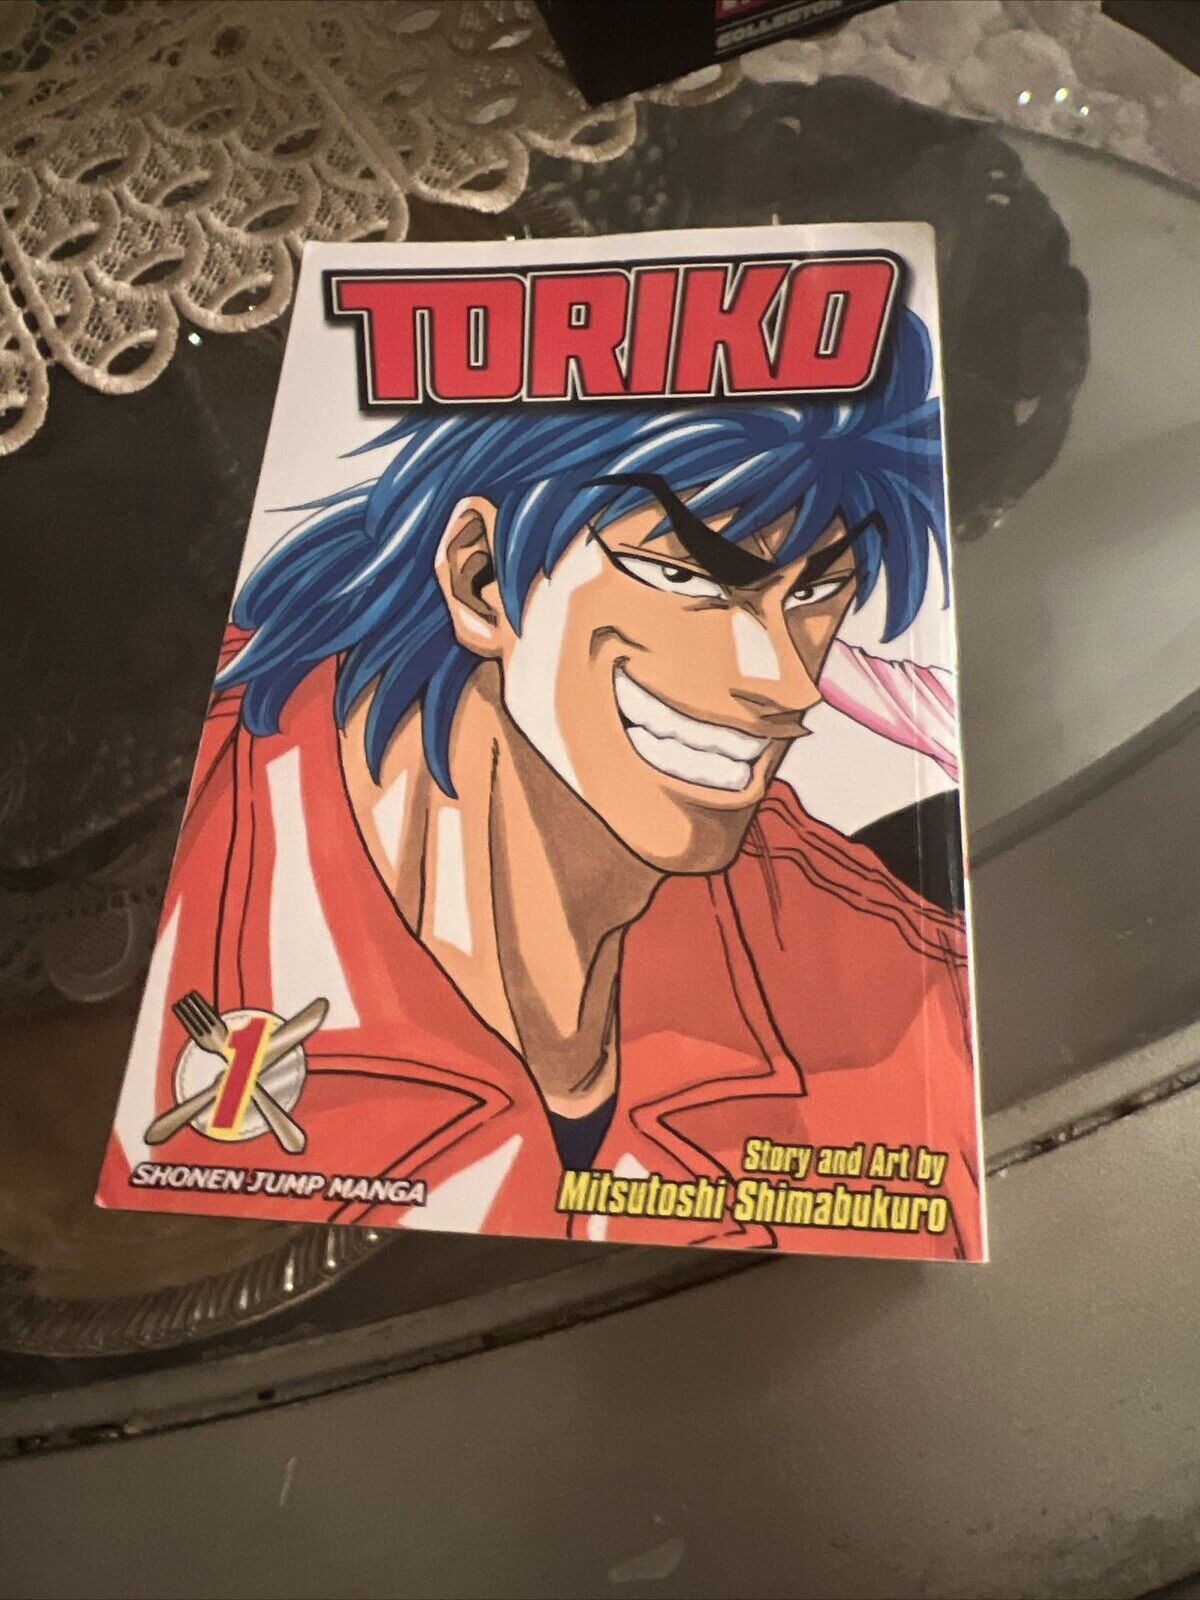 Toriko Volume / Vol. 1 (1) Out of print - RARE FIRST PRINT